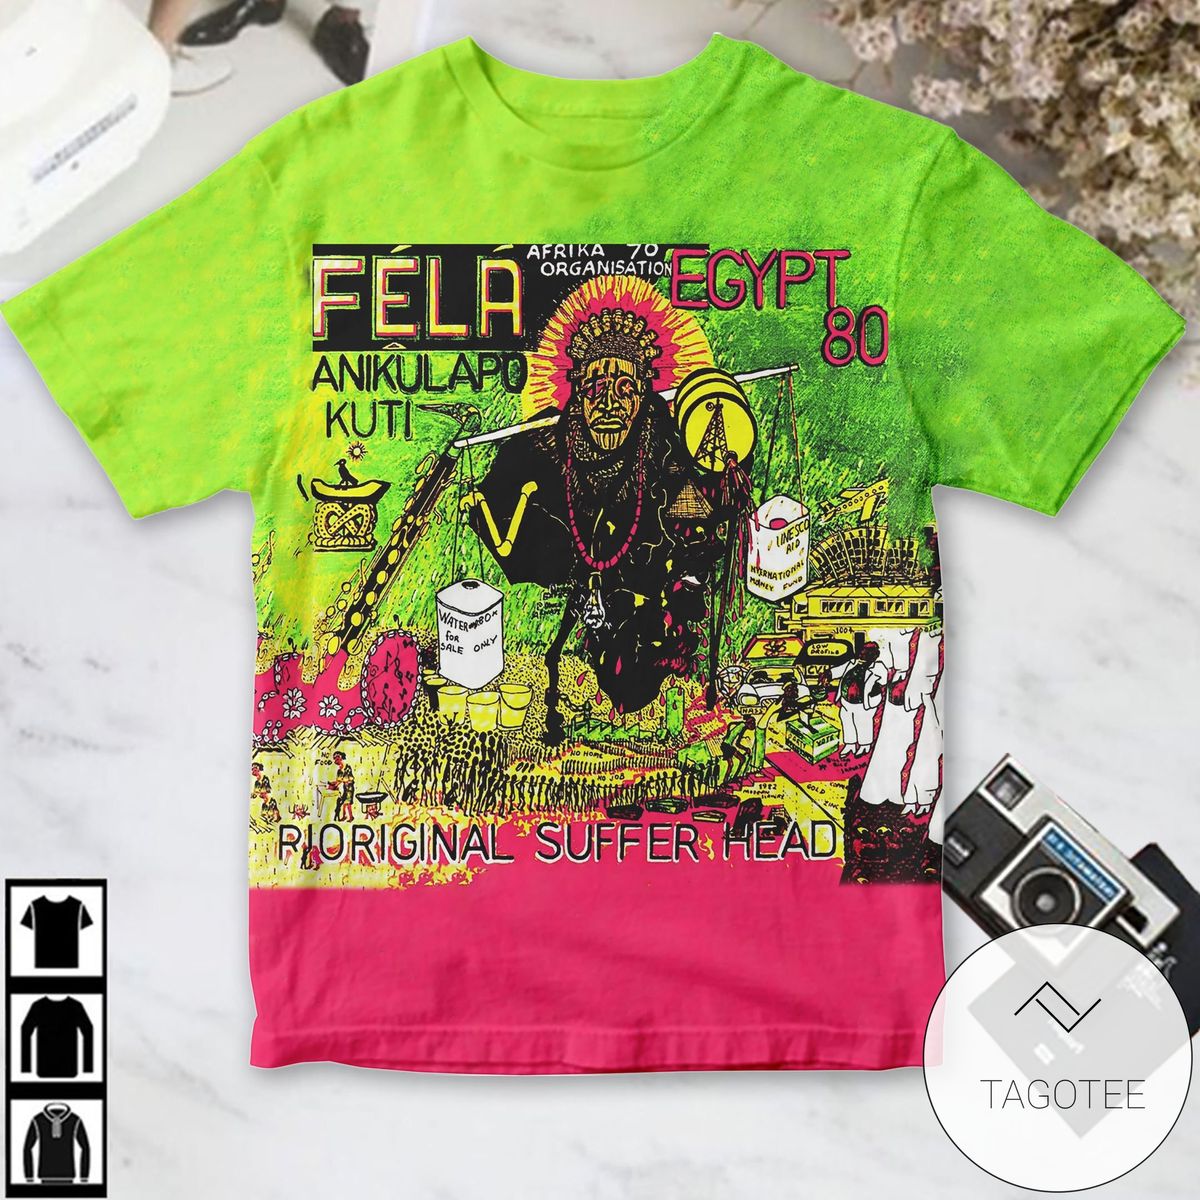 Fela Kuti Original Suffer Head Album Cover Shirt